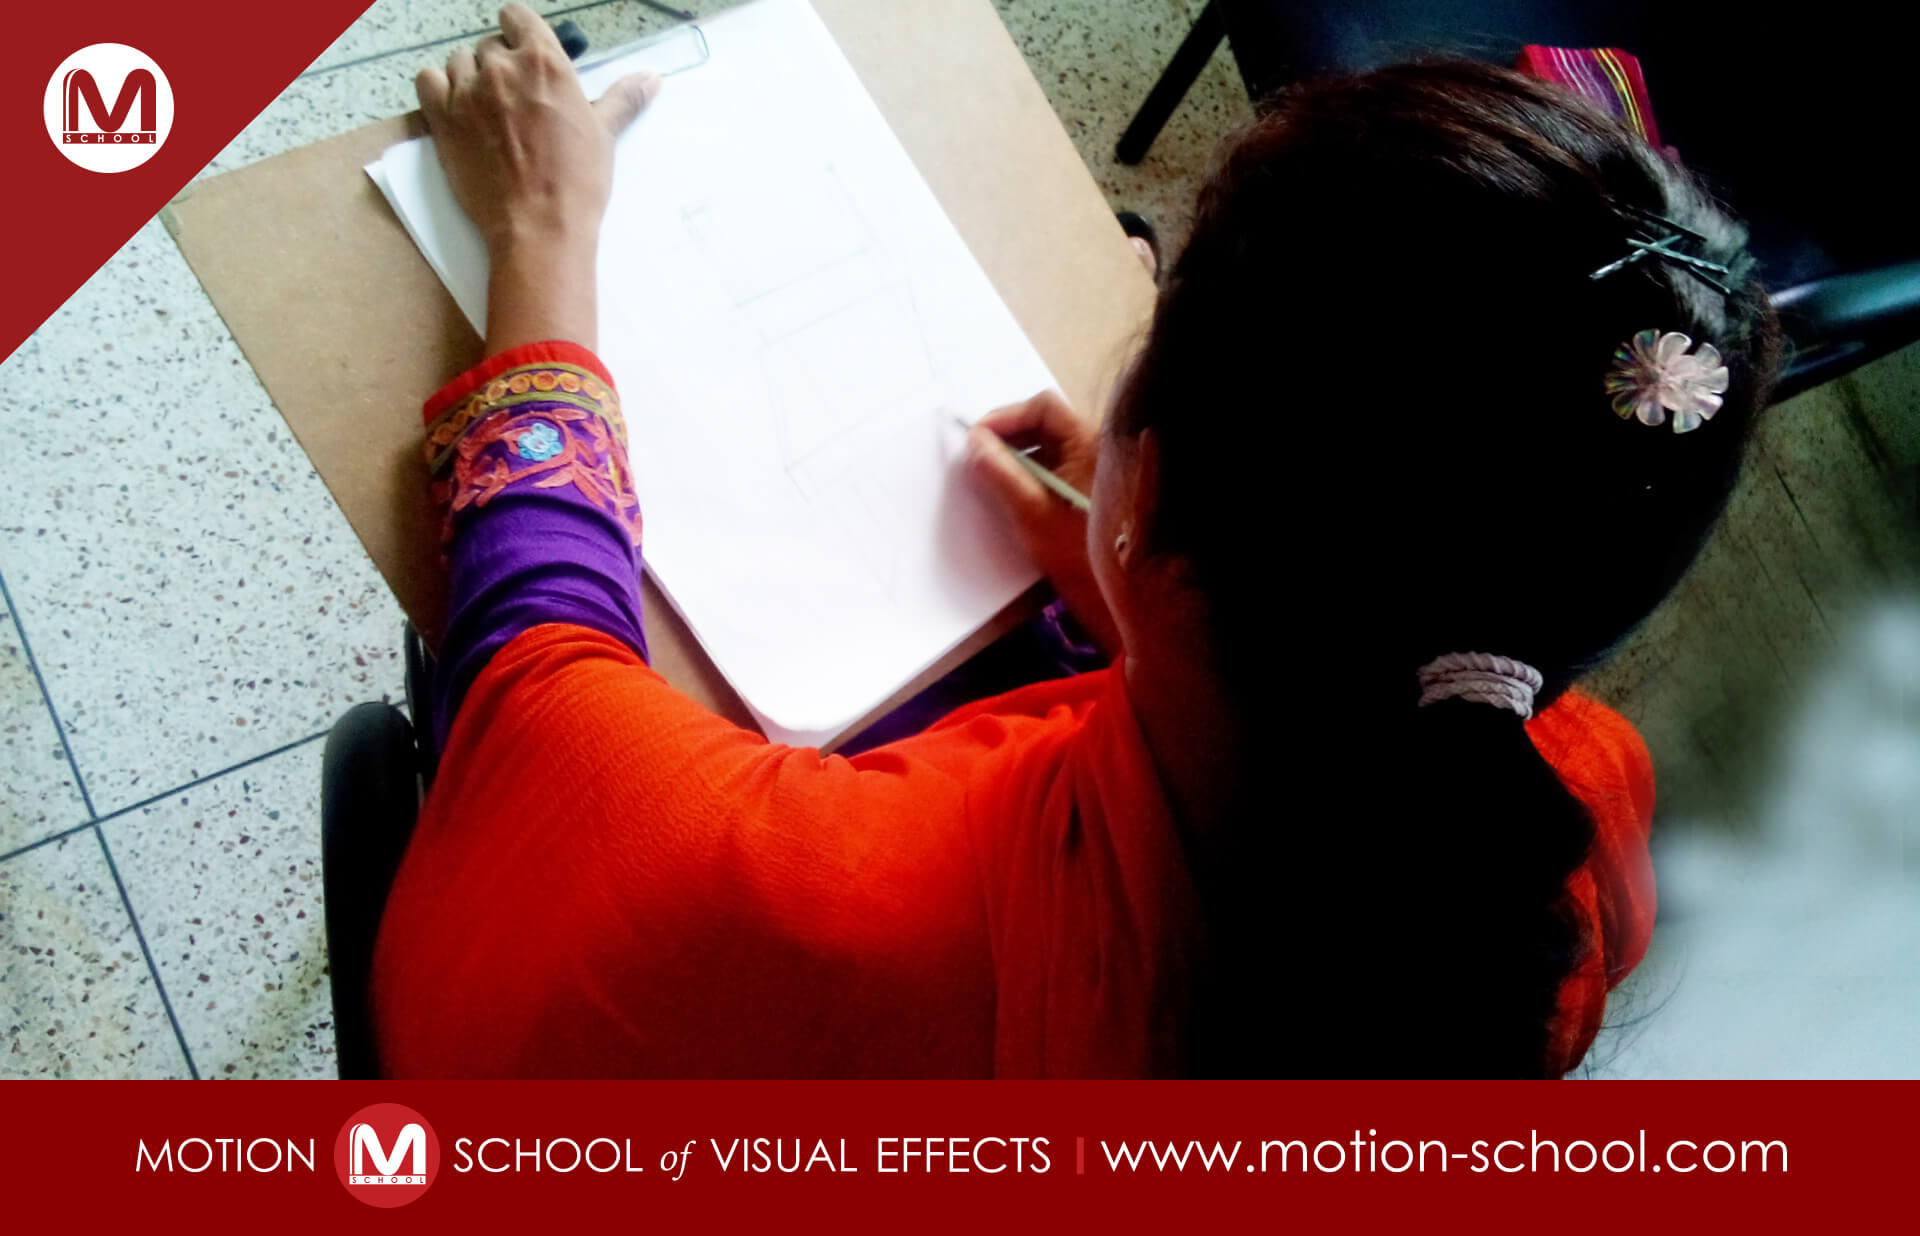 motion school, creative it, avva , VFX training school, daffodil university, motion school dhaka, motion school Bangladesh